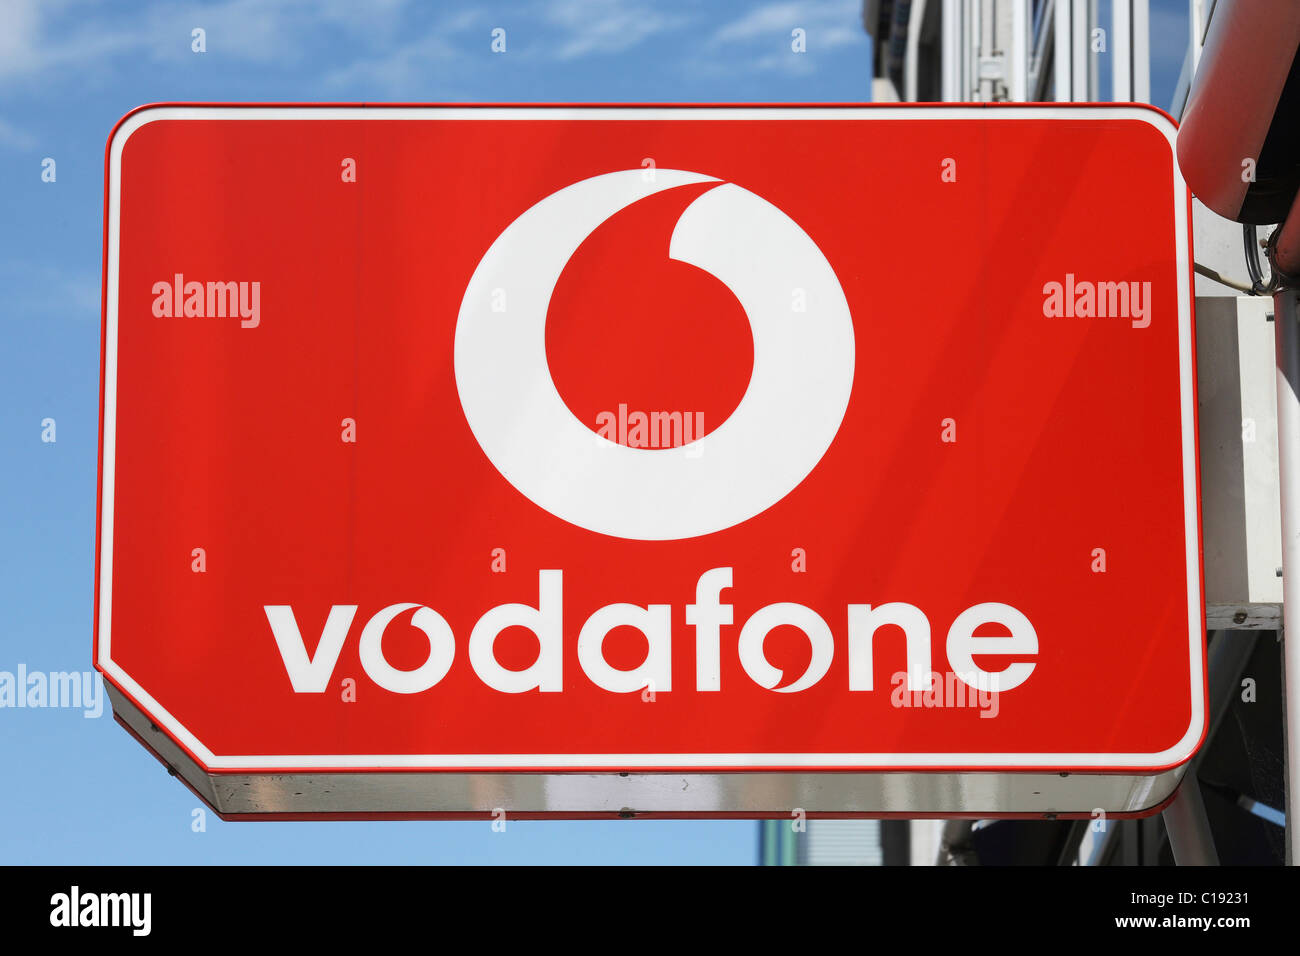 Vodafone logo Stock Photo